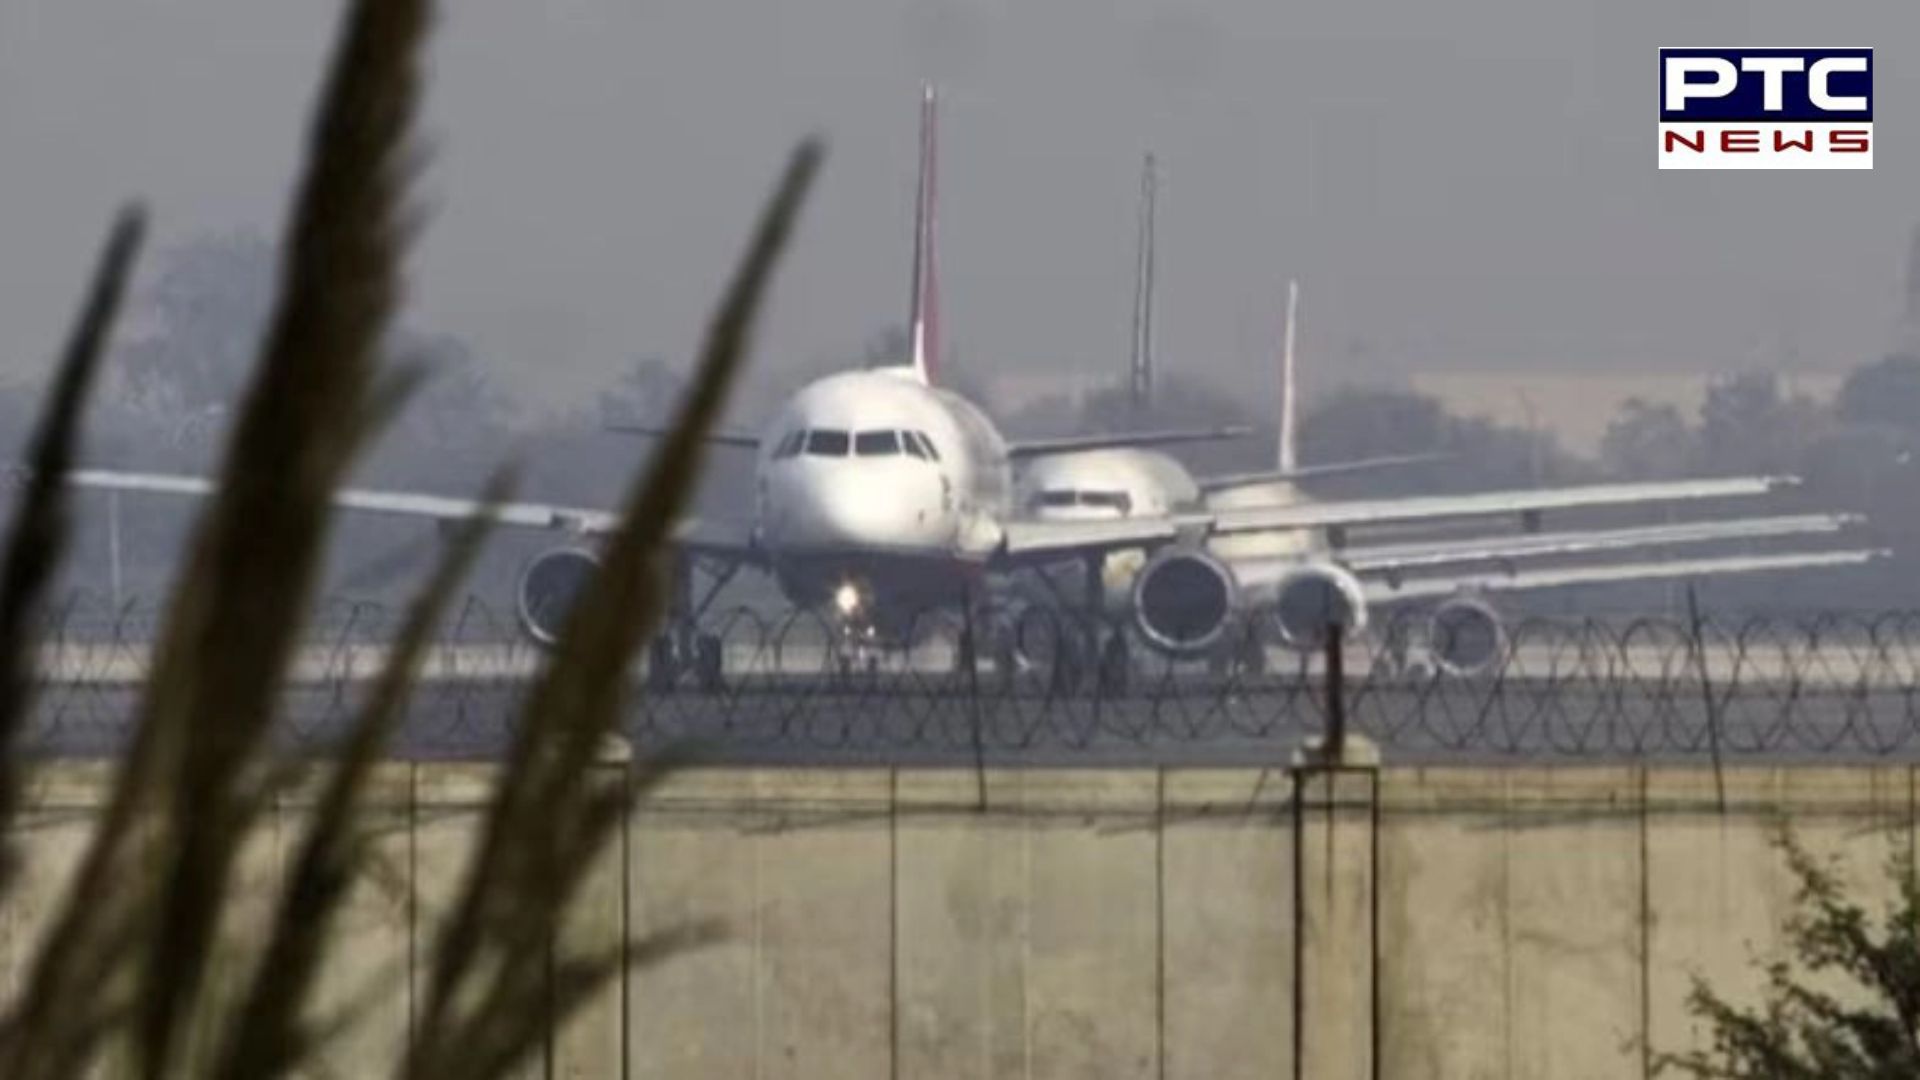 Dense fog disrupts Delhi airport operations, causing delay for 30 flights